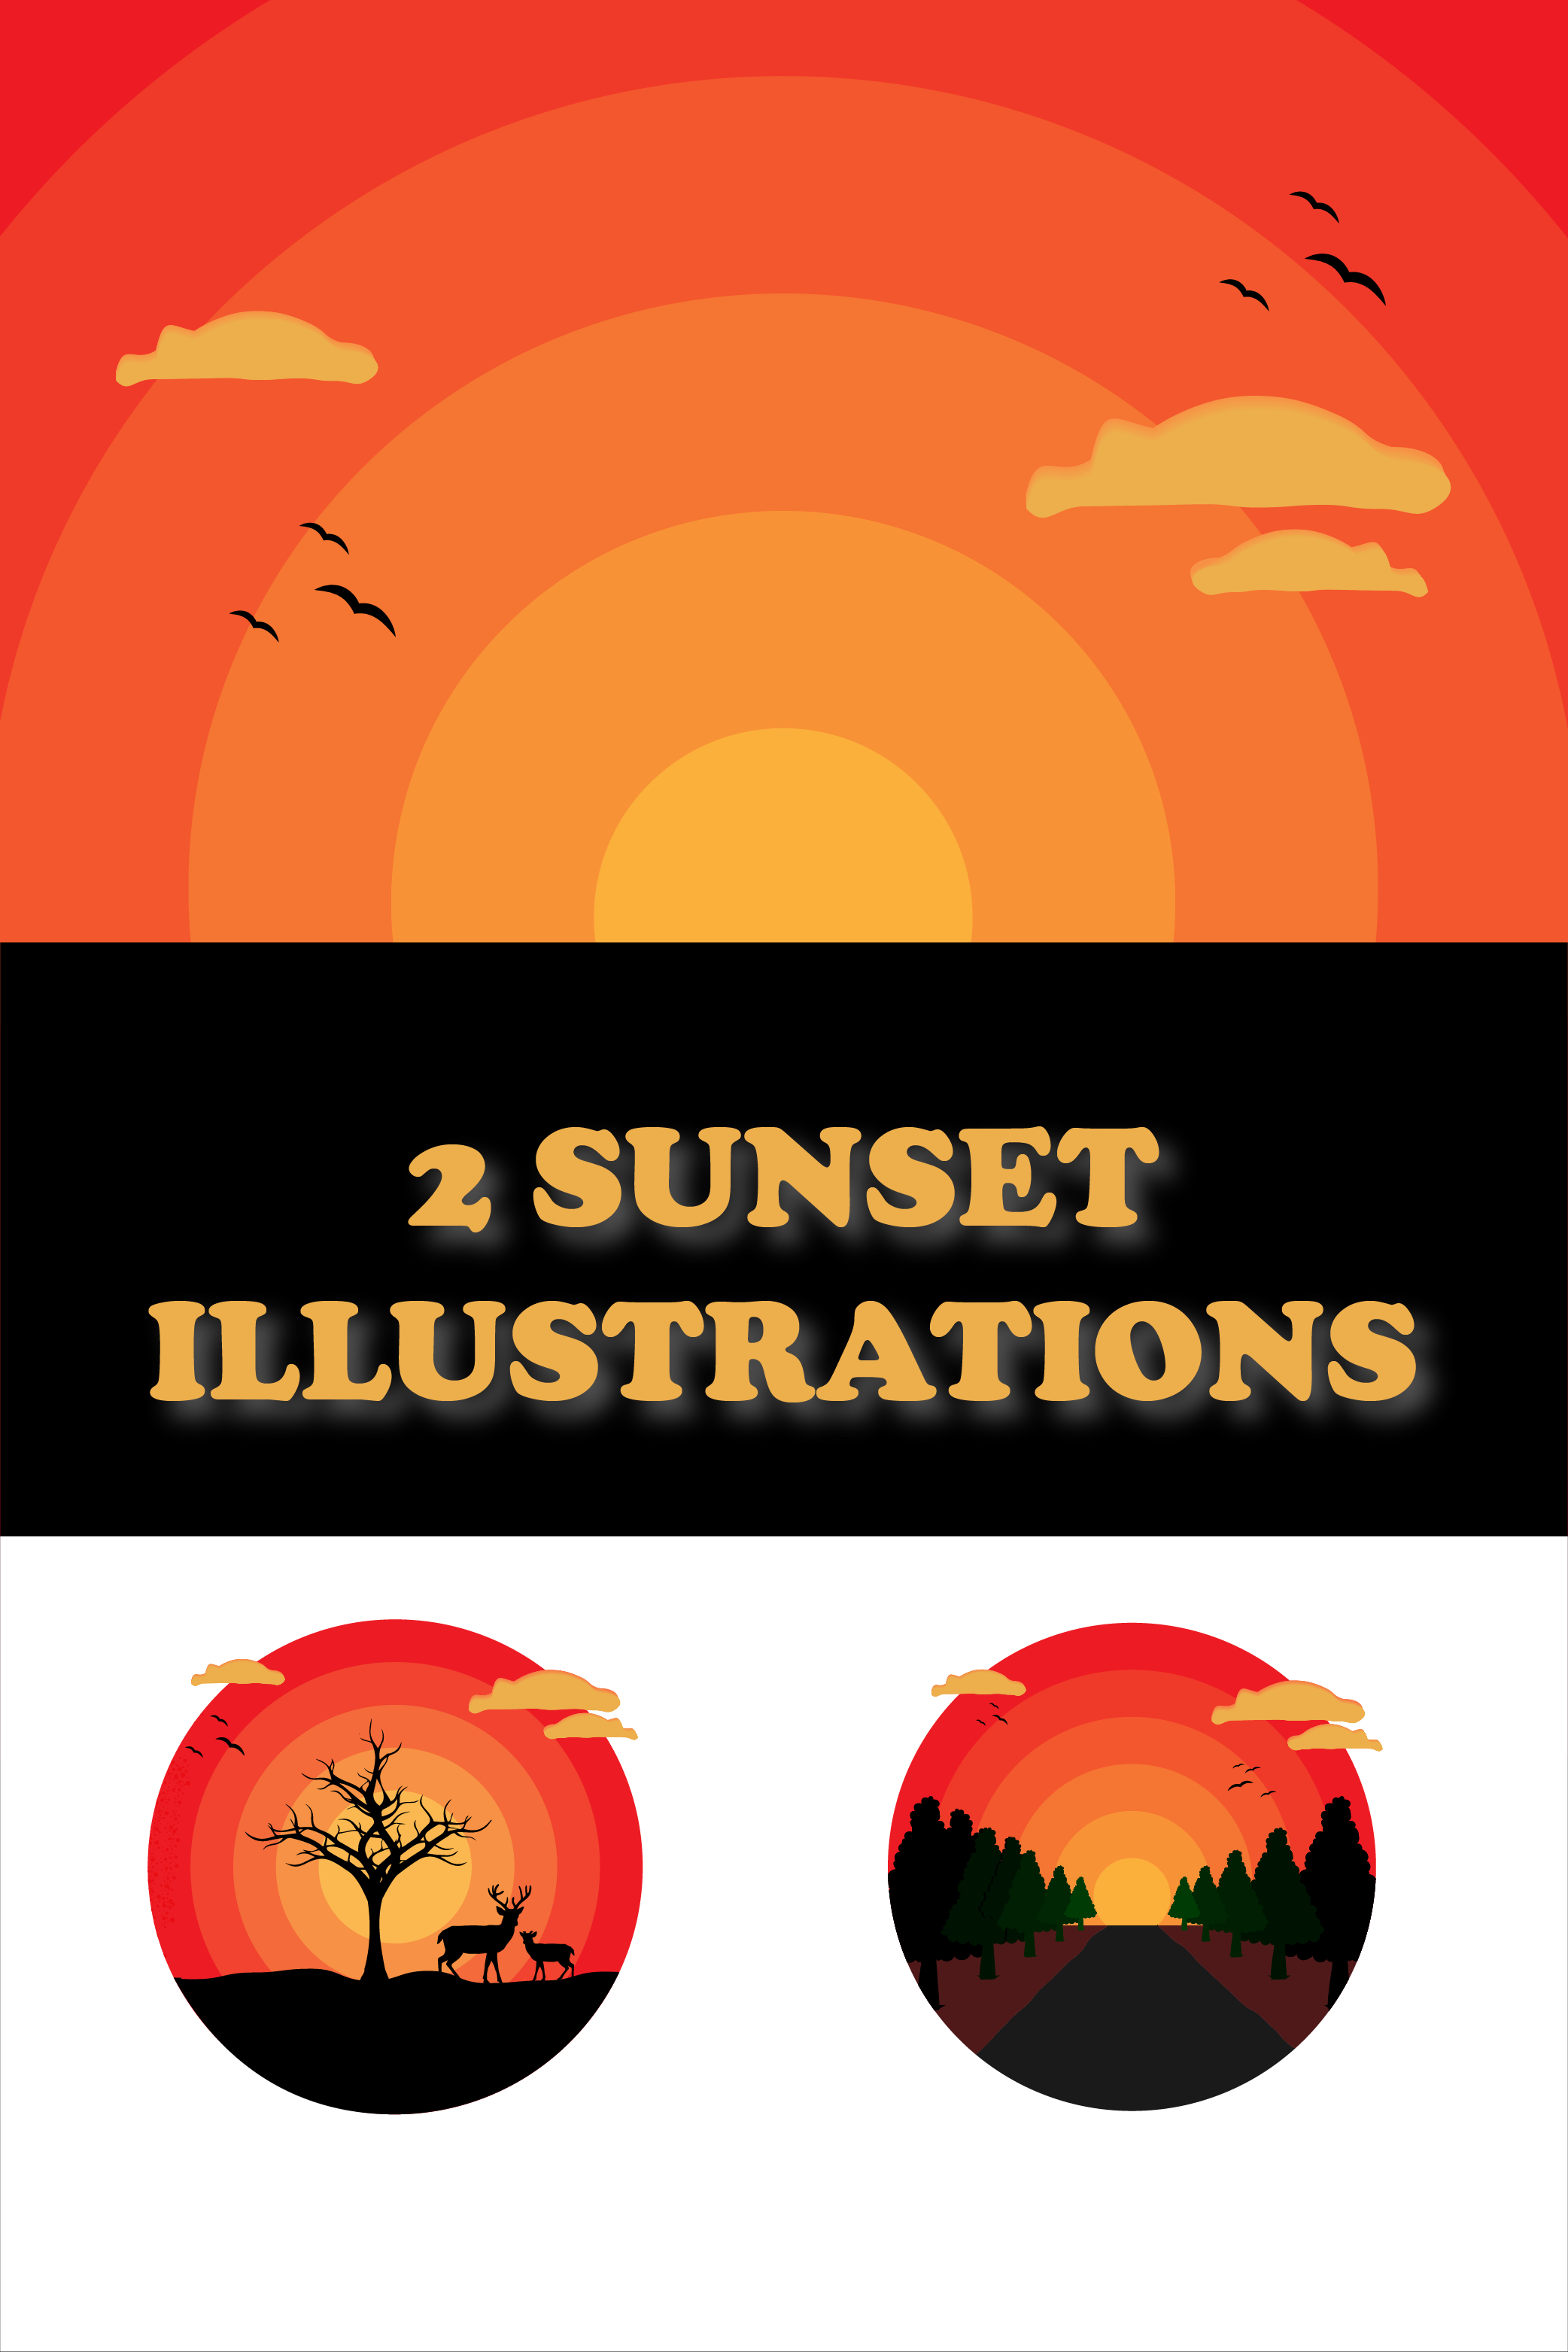 2 sunset illustrations pinterest preview image.